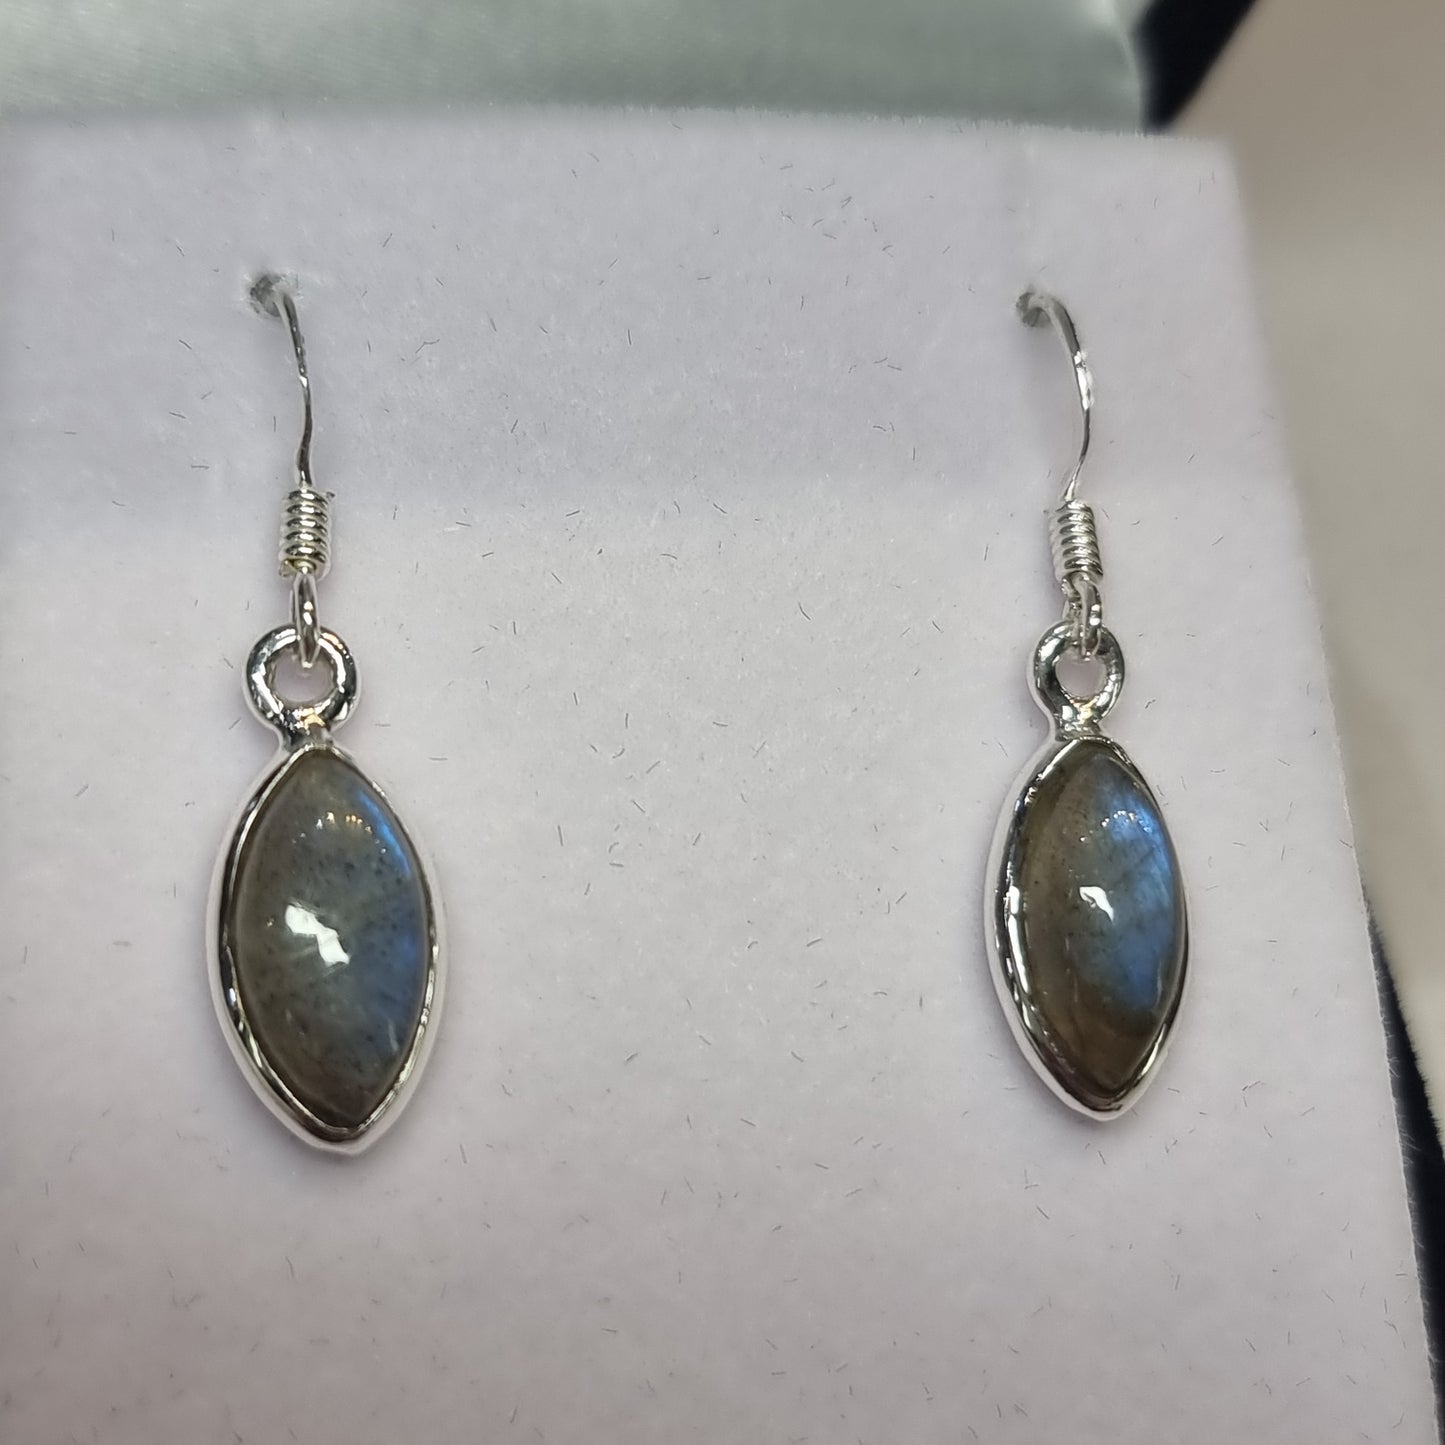 Labradorite earrings - Rivendell Shop